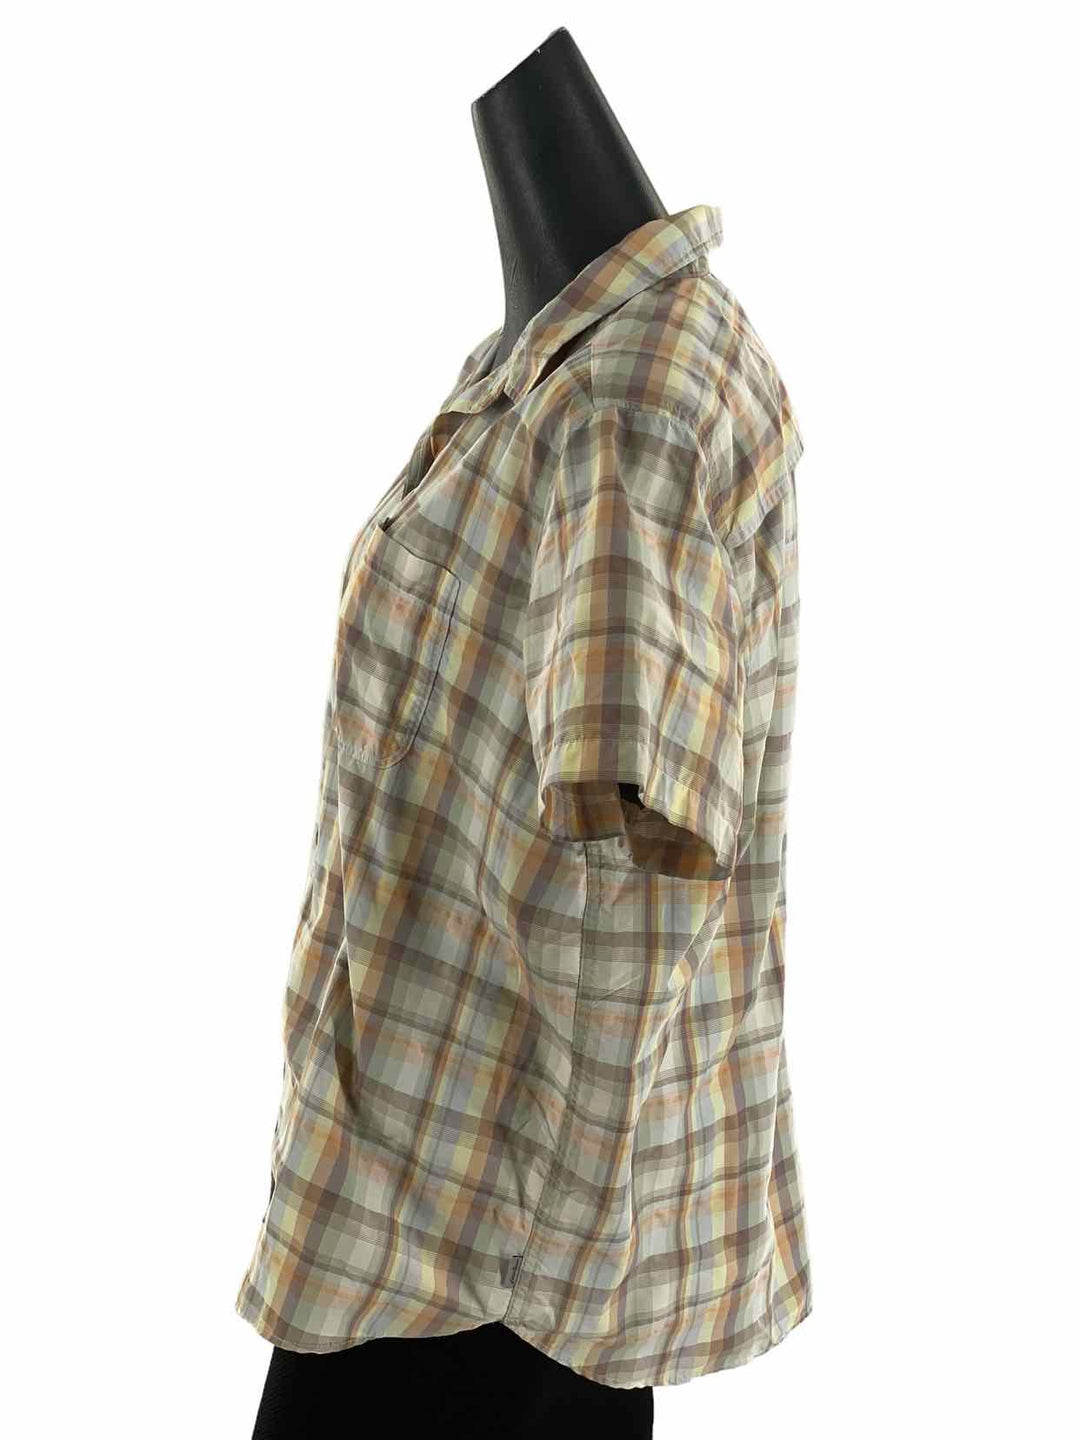 Eddie Bauer Size XL Multi-Color Plaid Short Sleeve Shirts